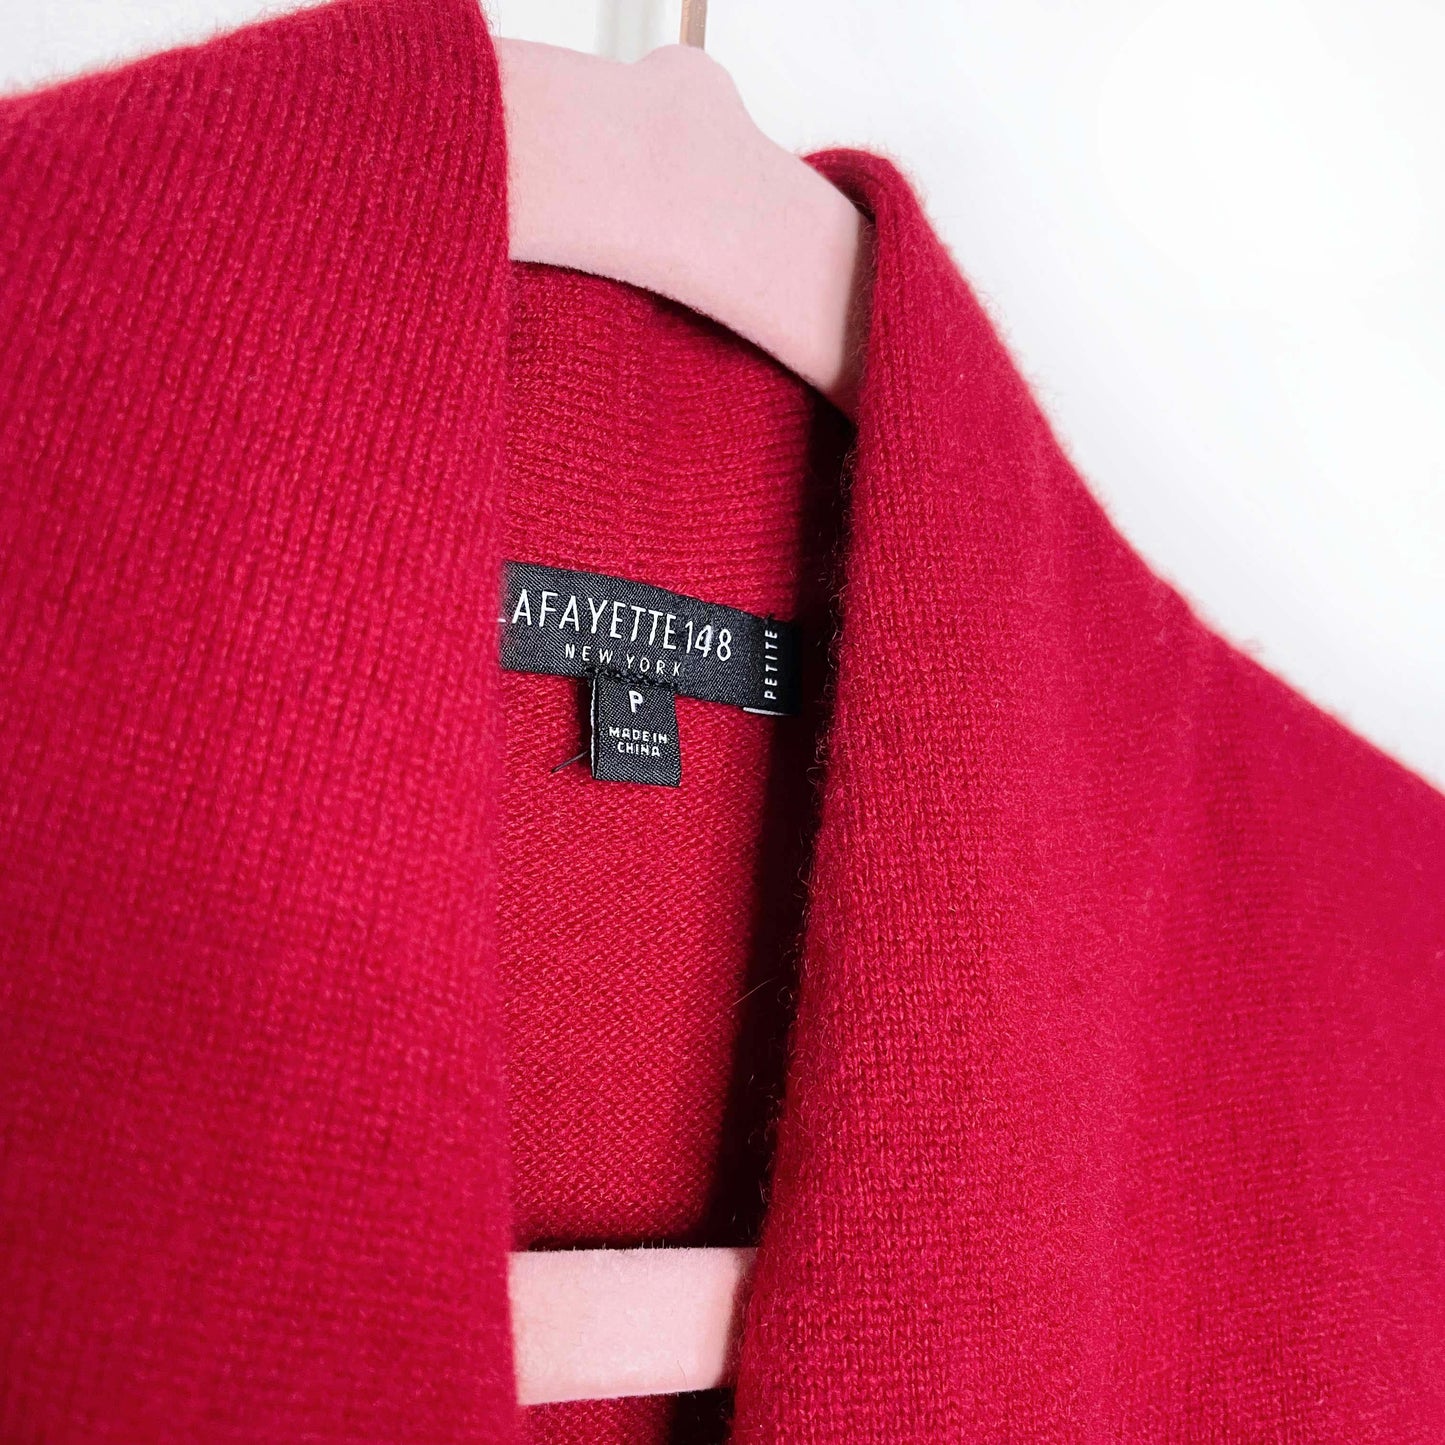 lafayette 148 faux wrap red cashmere sweater - size P petite